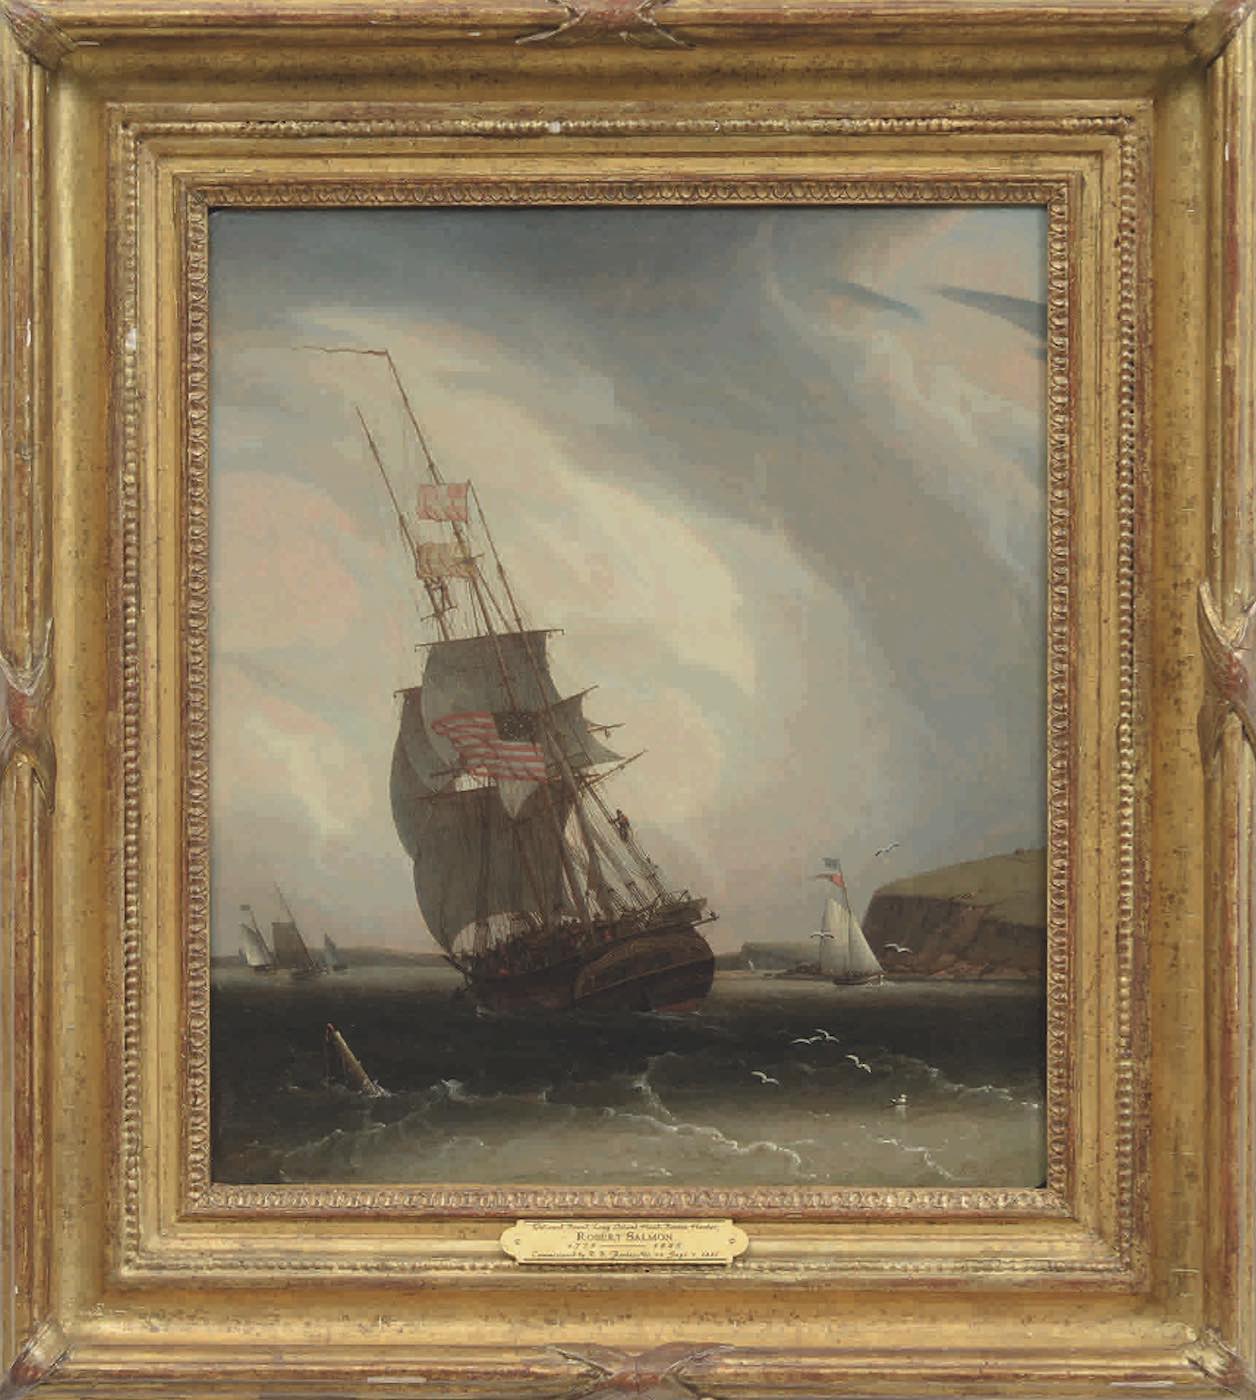 Robert Salmon's “Outward Bound, Long Island Head, Boston Harbor" Realized $82,950.